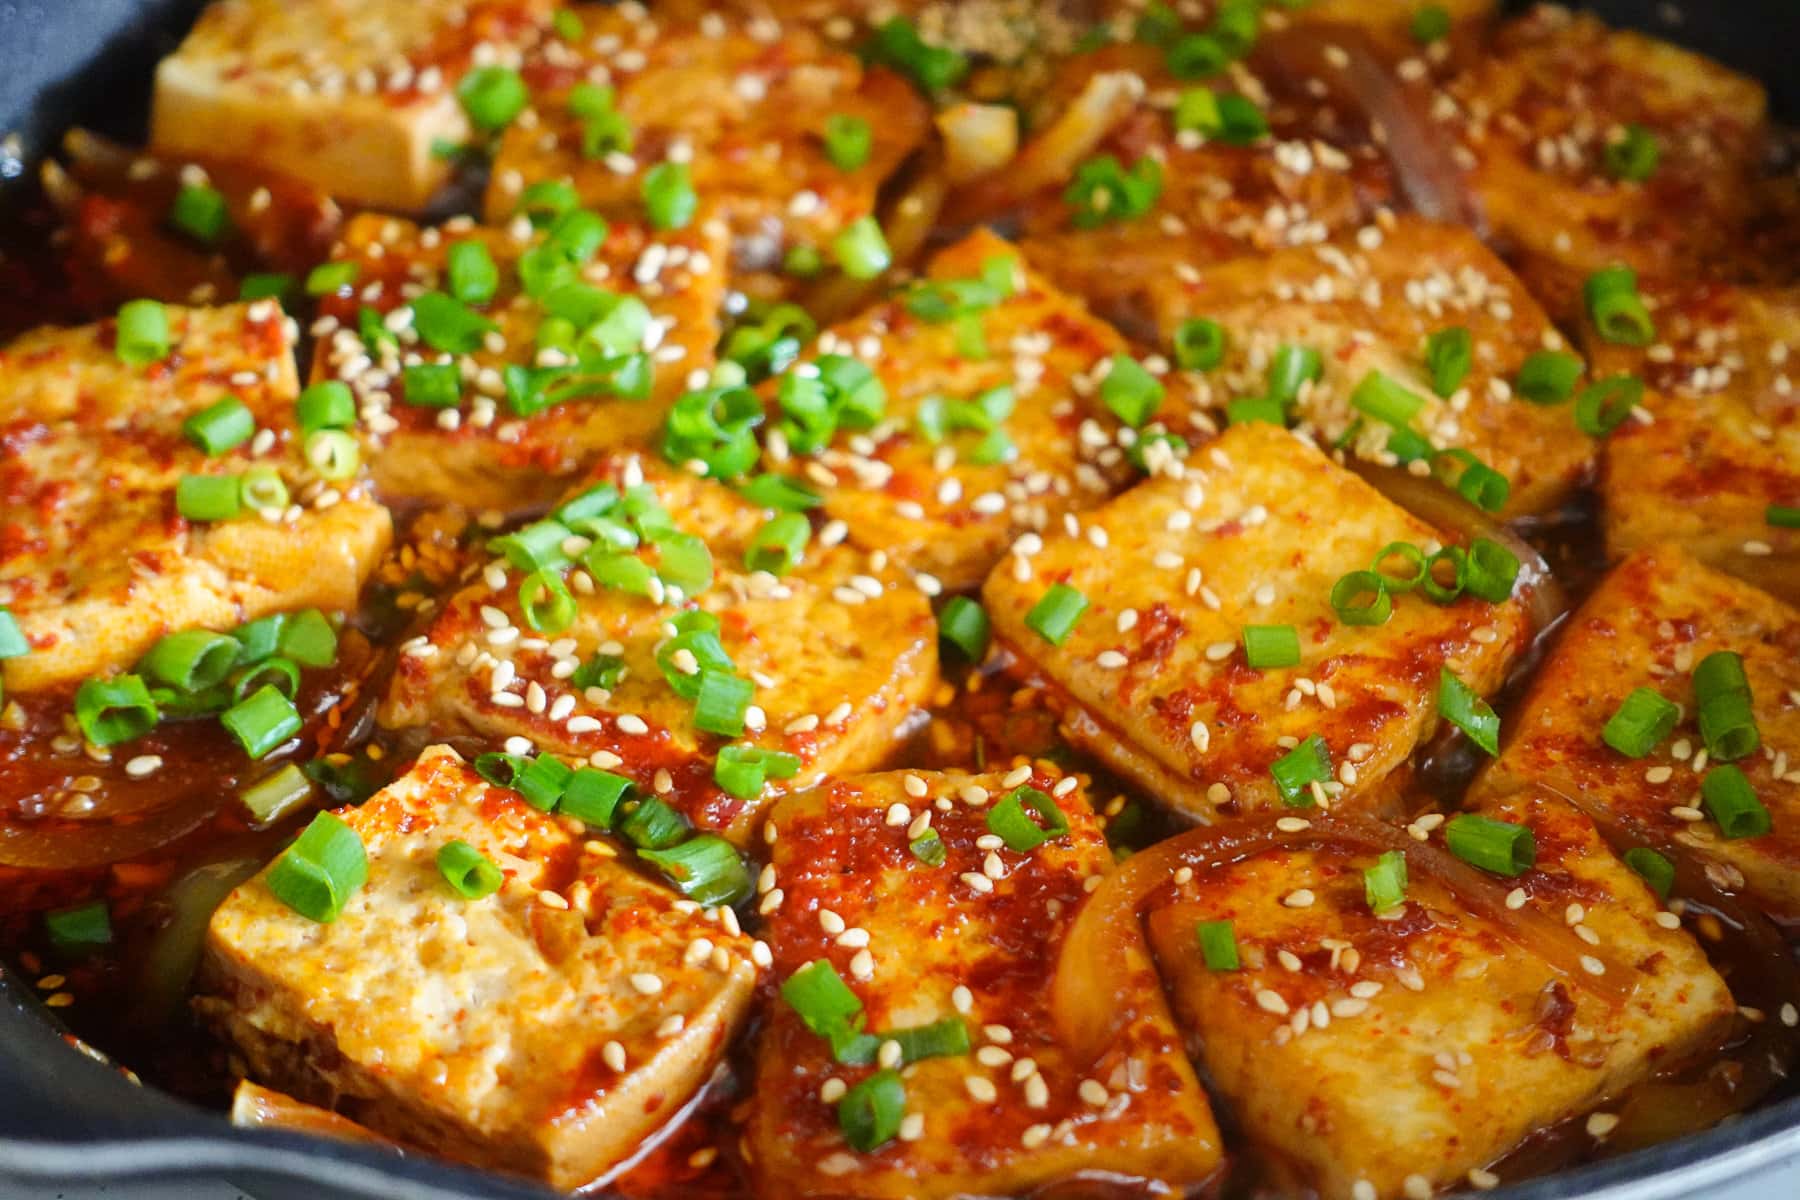 A plate of Korean Braised Tofu